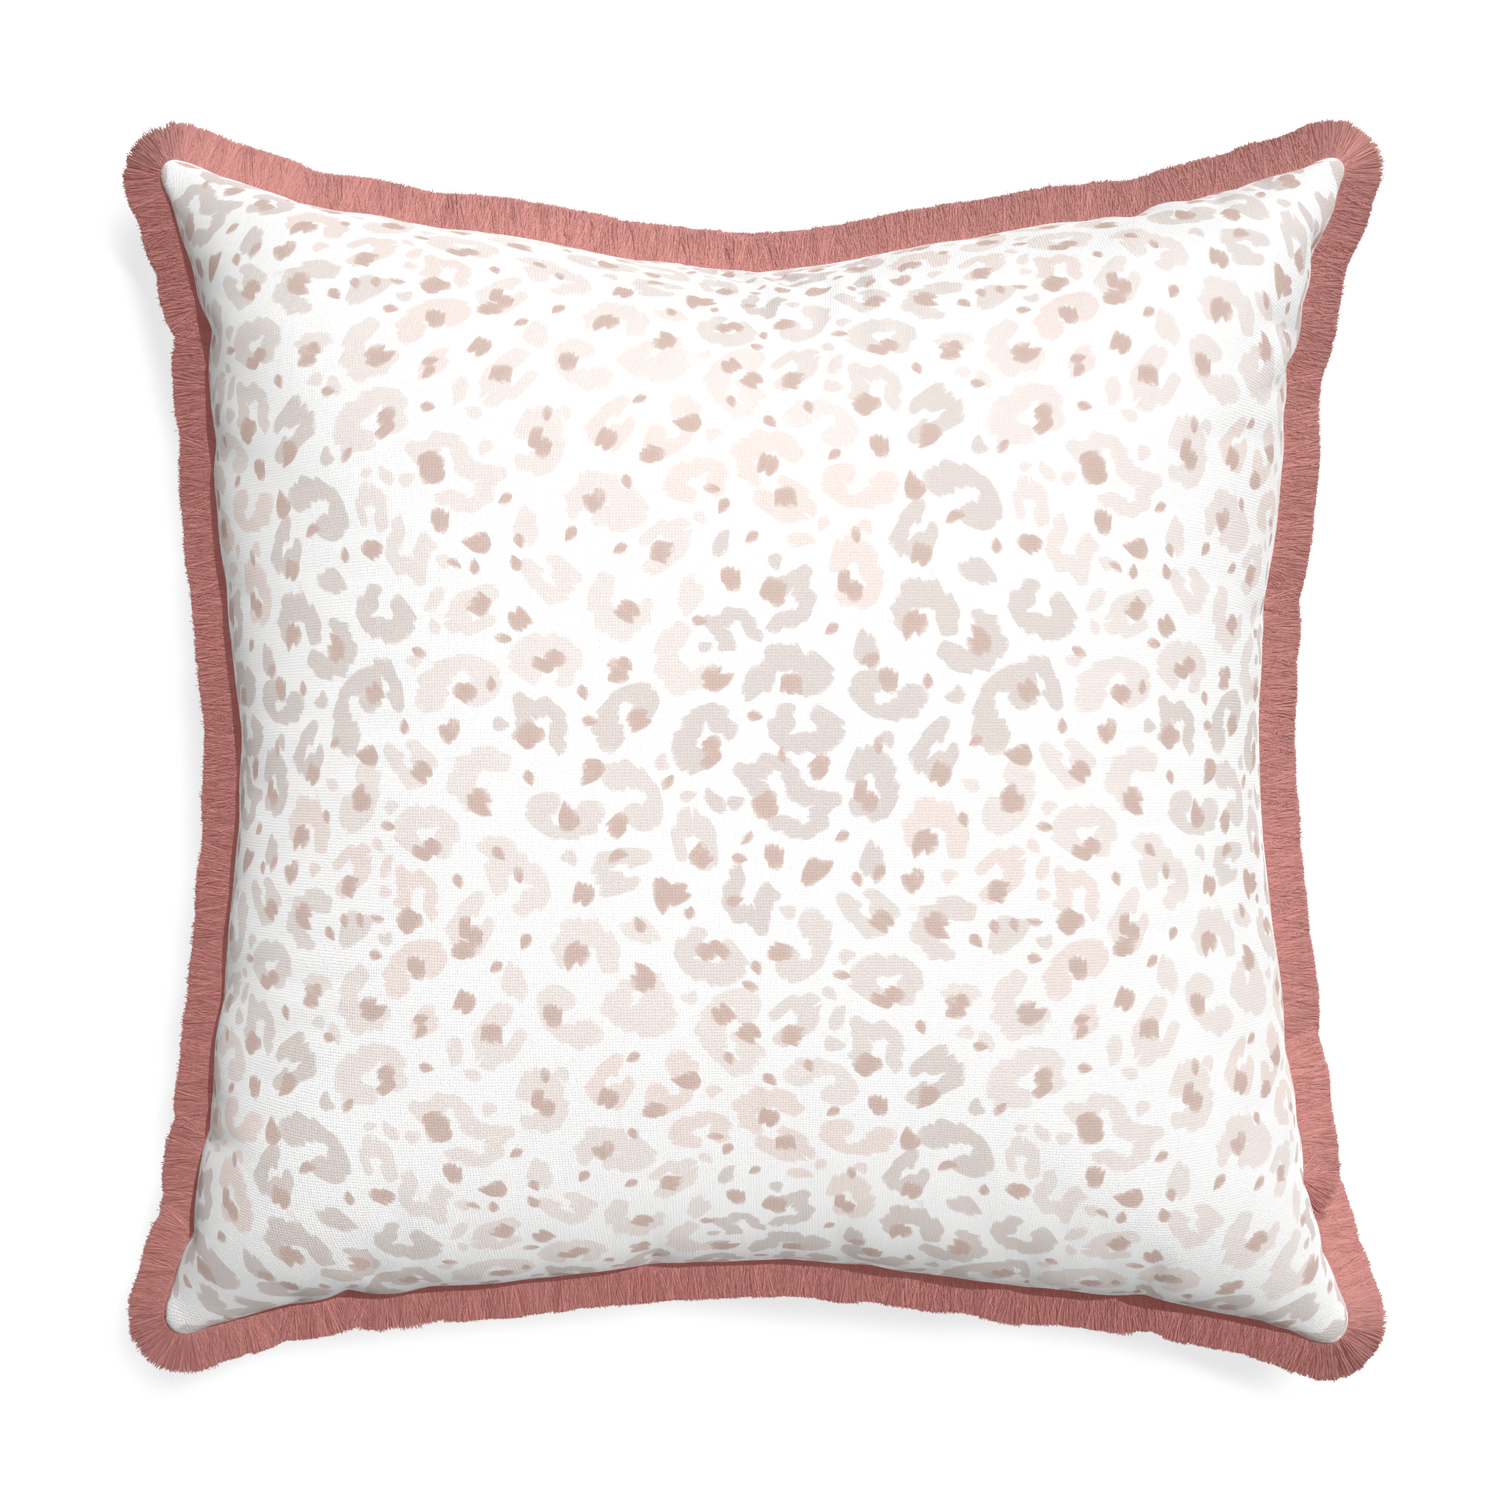 Euro-sham rosie custom pillow with d fringe on white background